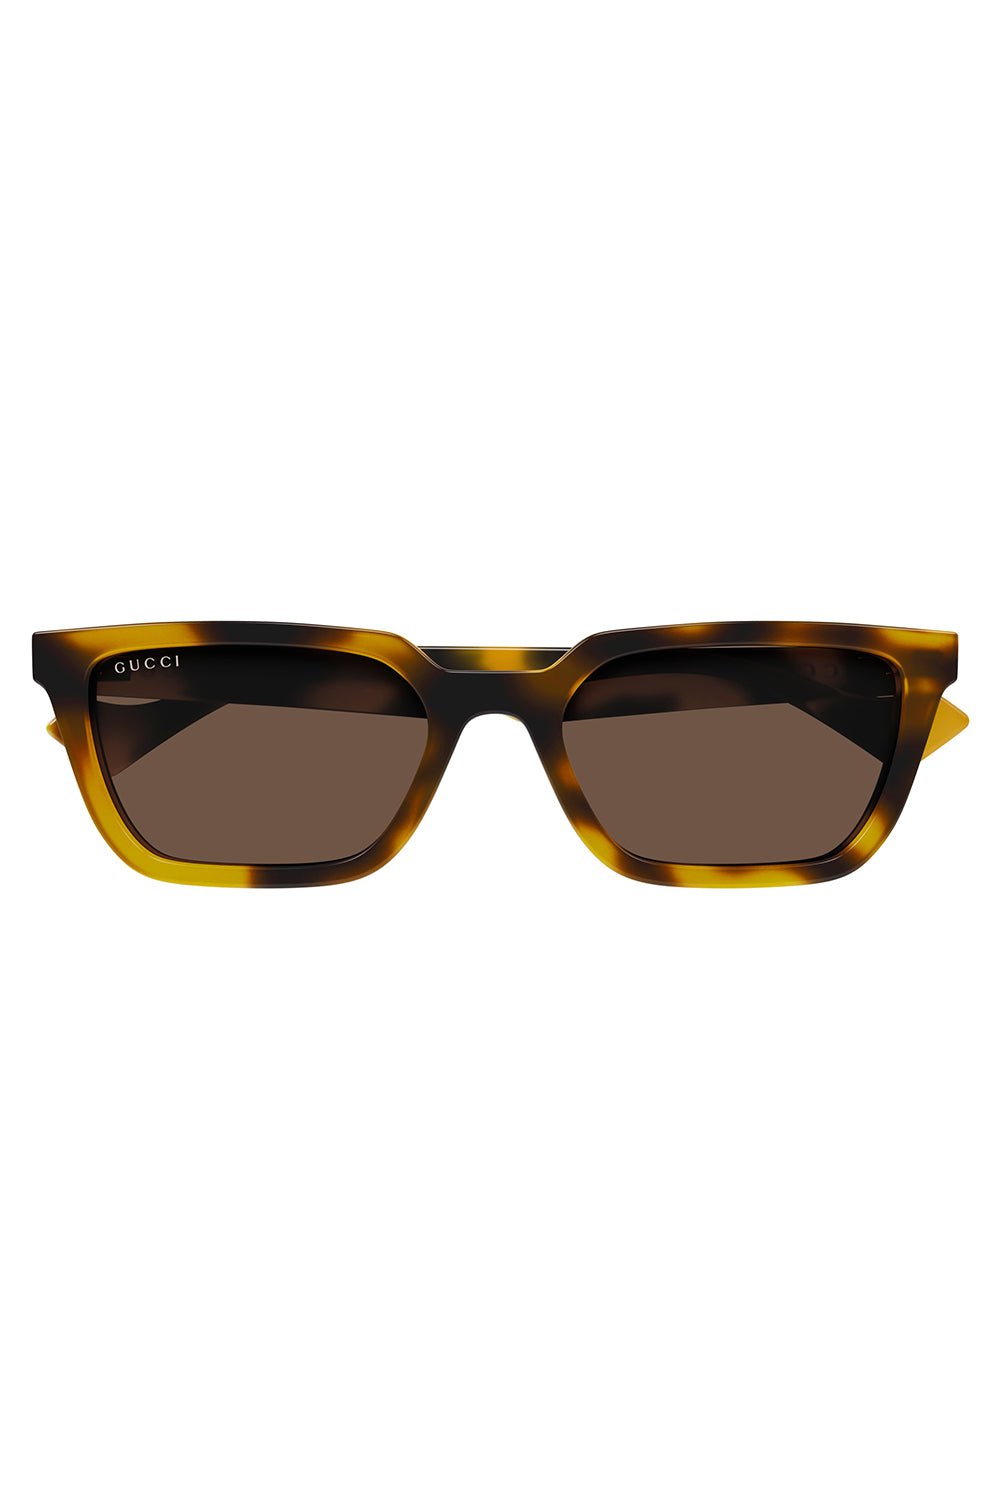 GUCCI-Rectangular Frame Sunglasses-HAVANA/YELLOW